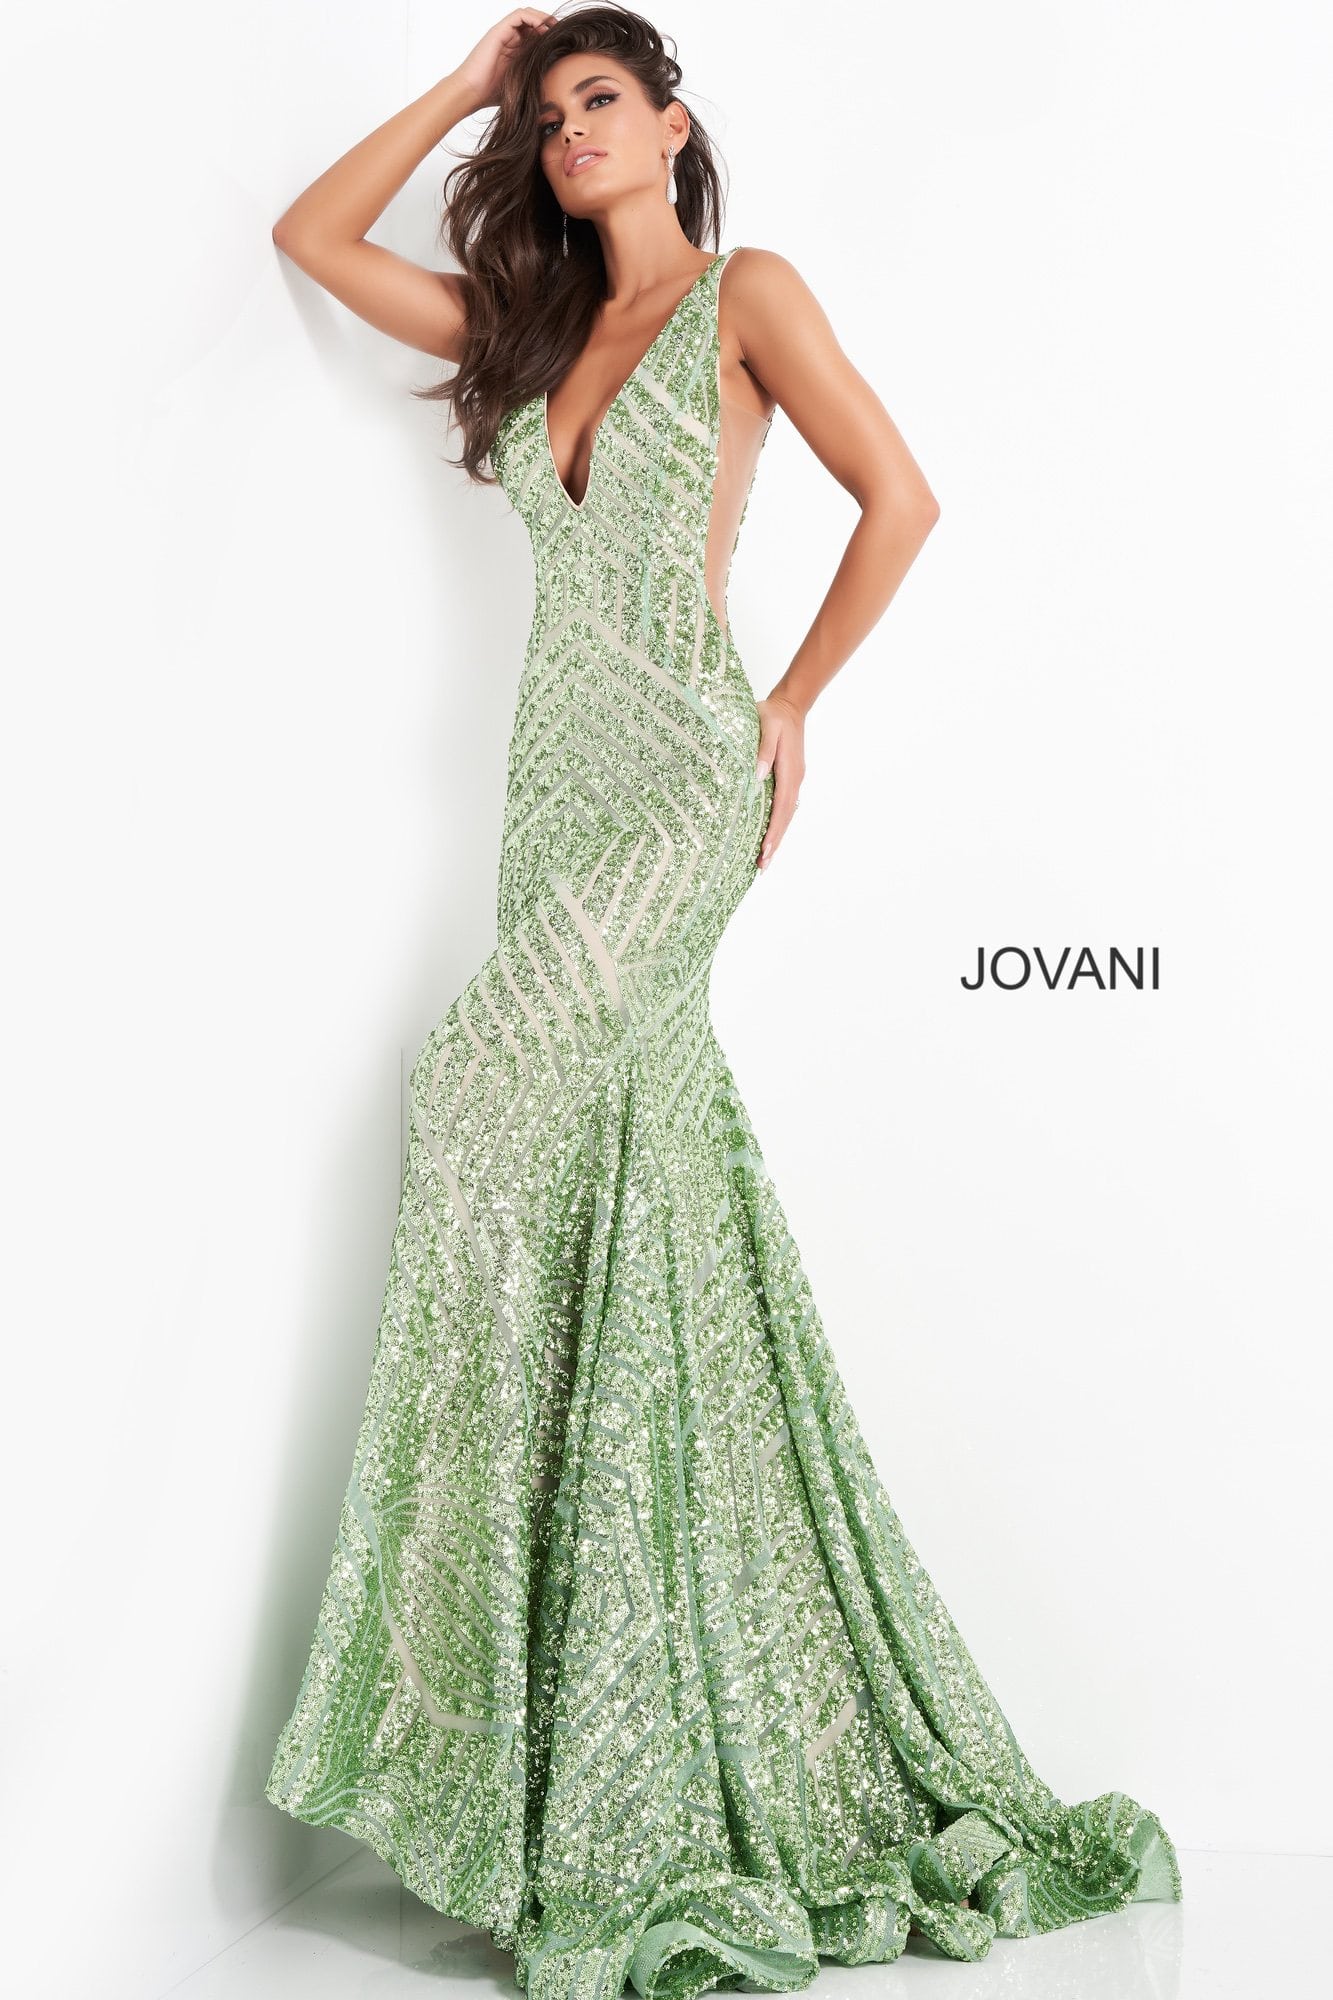 Jovani-59762-PALE-GREEN-PROM-DRESS-SIDE-VIEW-PLUNGING-NECKLINE-MERMAID-LONG-TRAIN